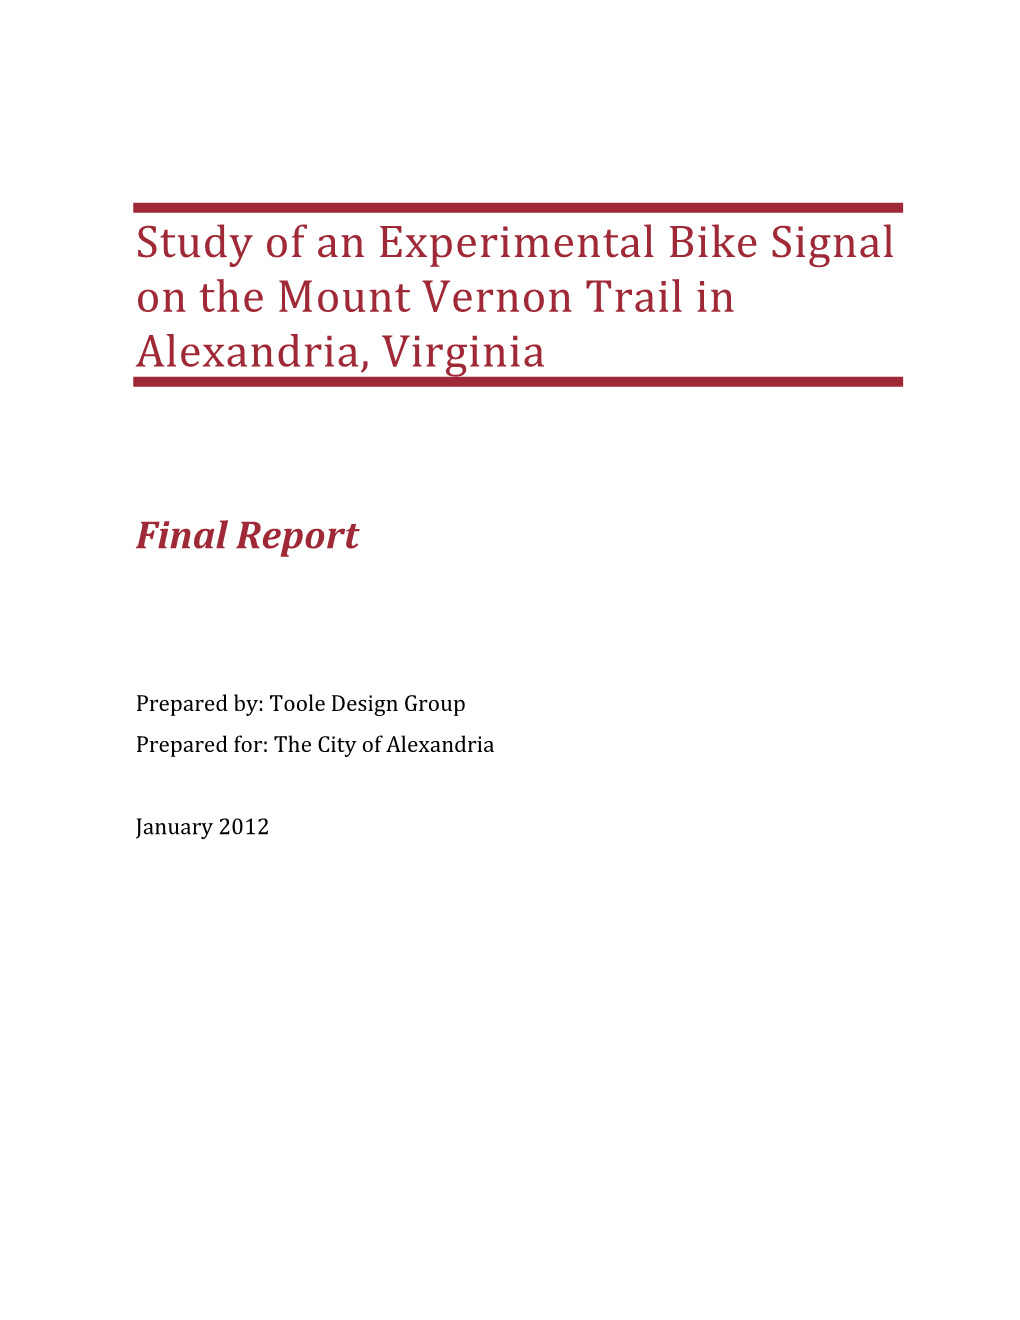 Mount Vernon Trail Bike Signal Progress Report